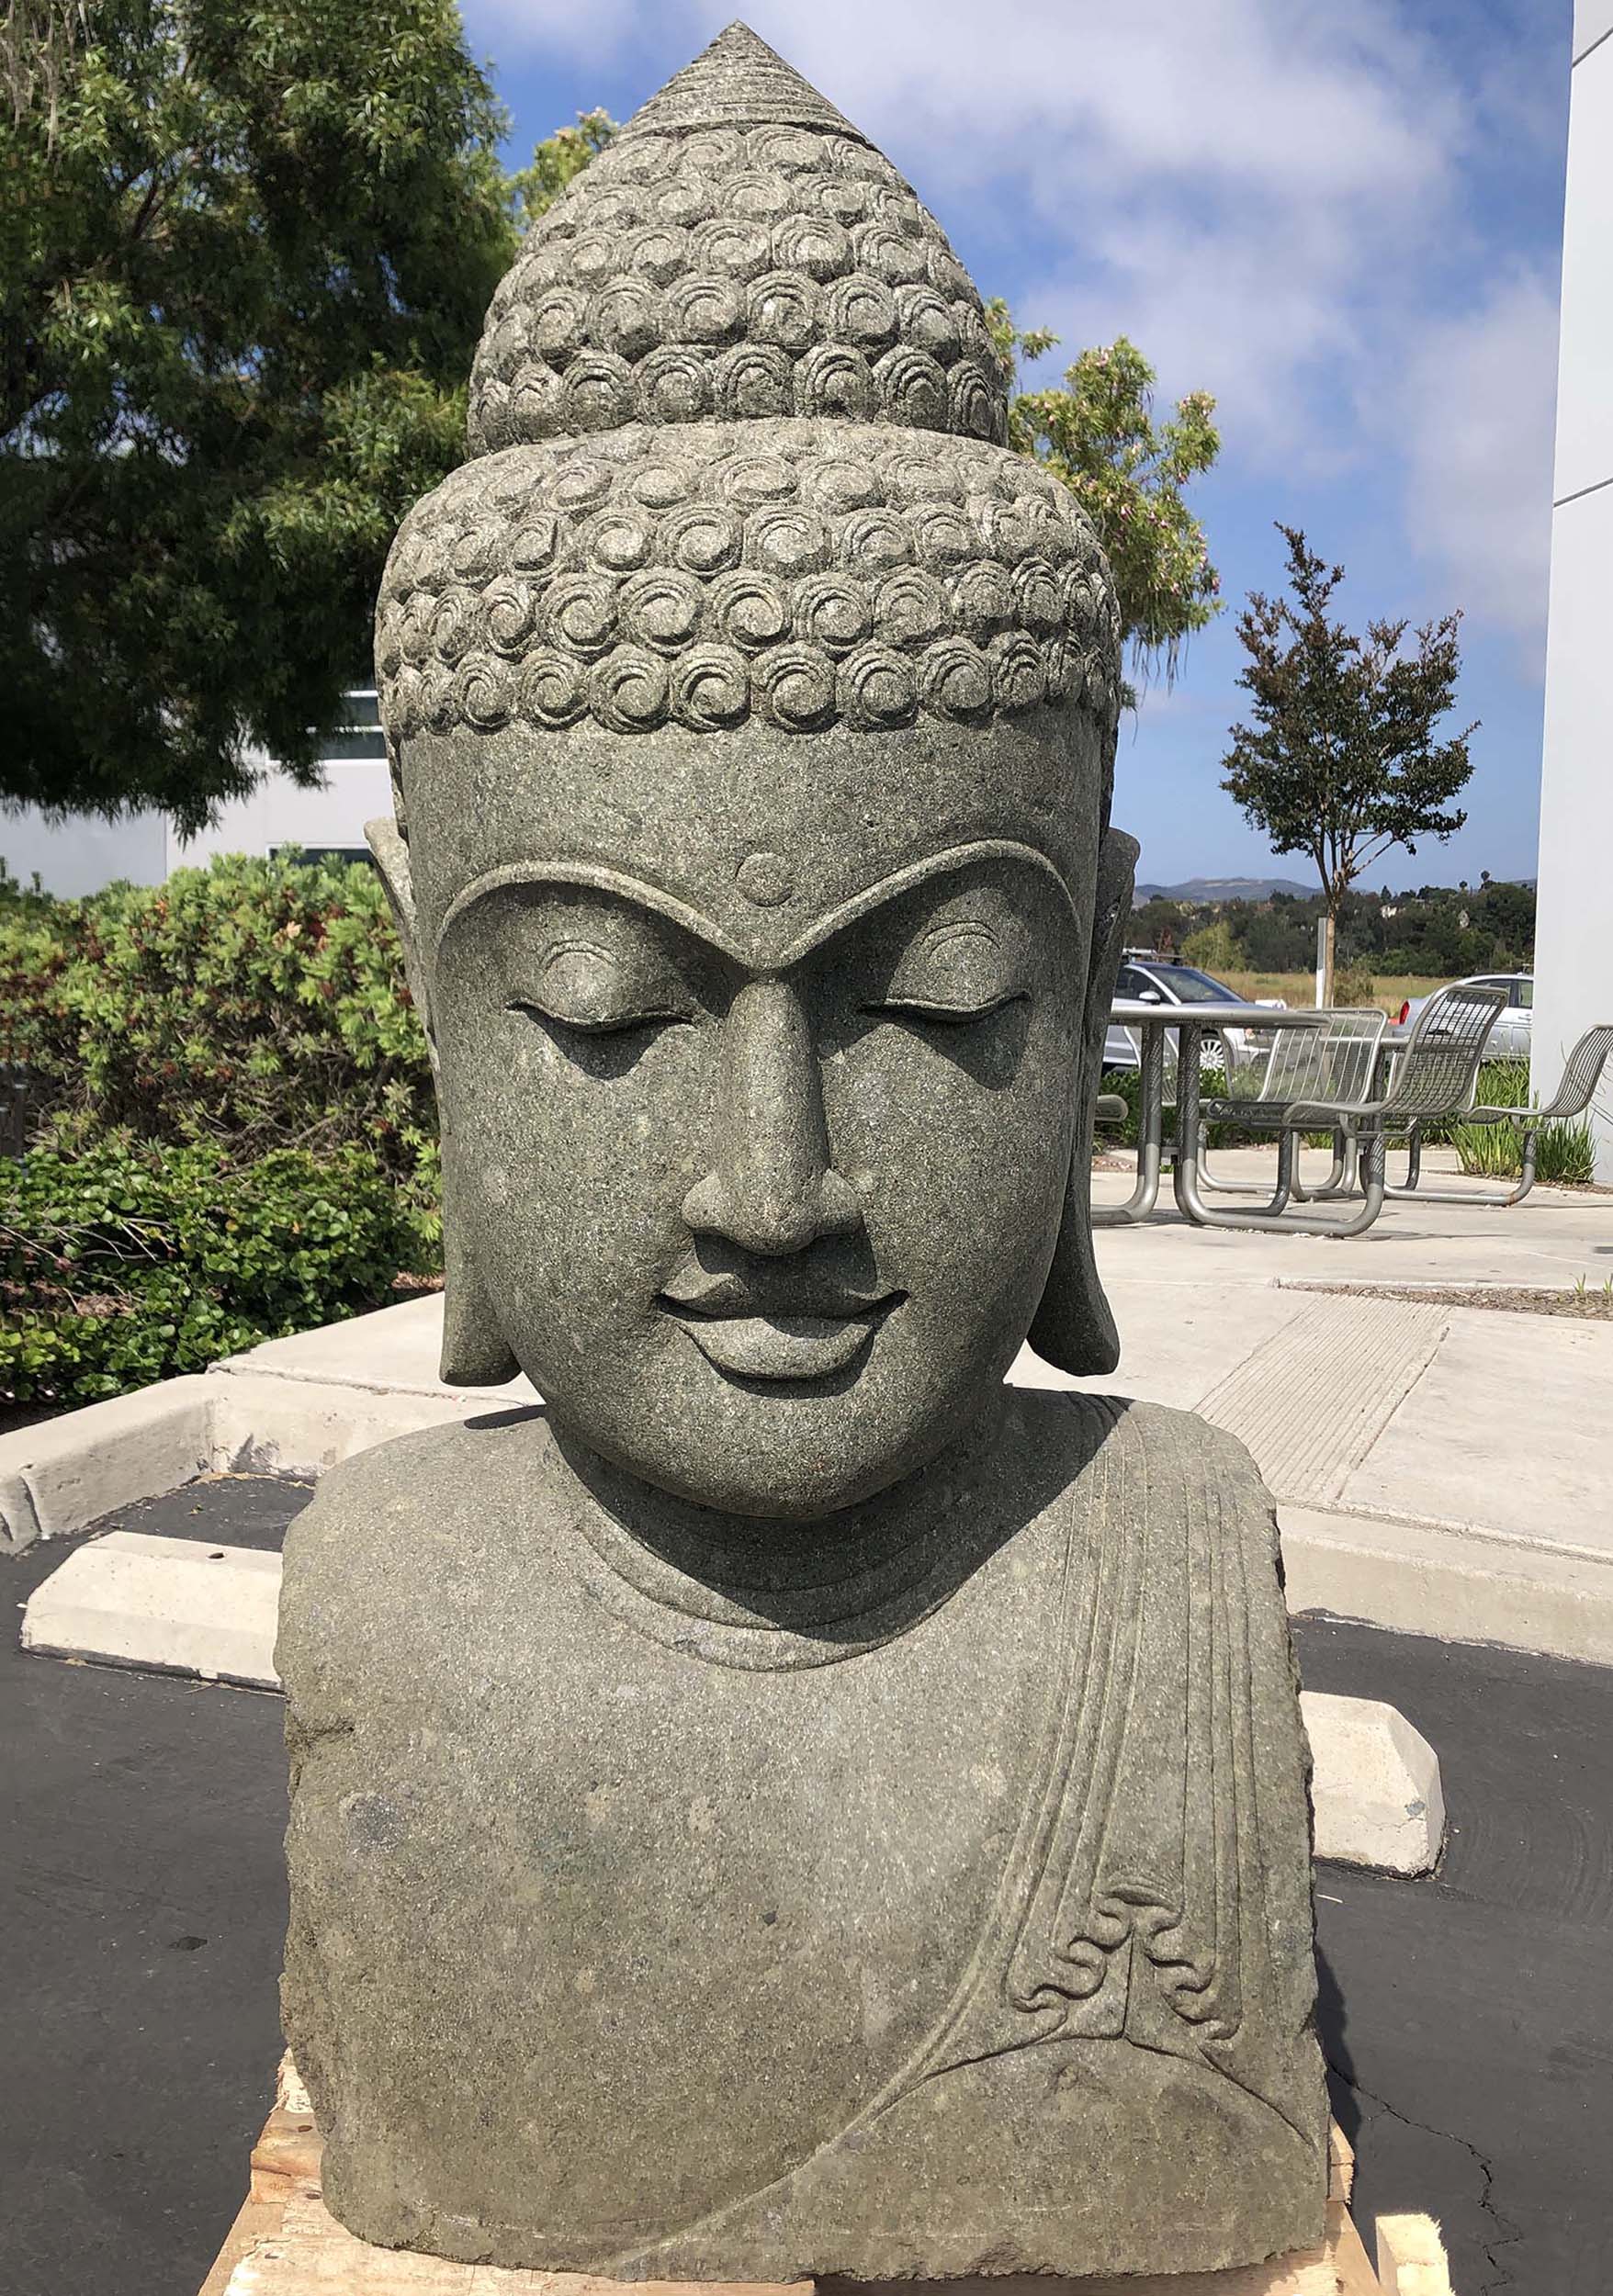 SOLD Stone Large Buddha Head Garden Sculpture 56